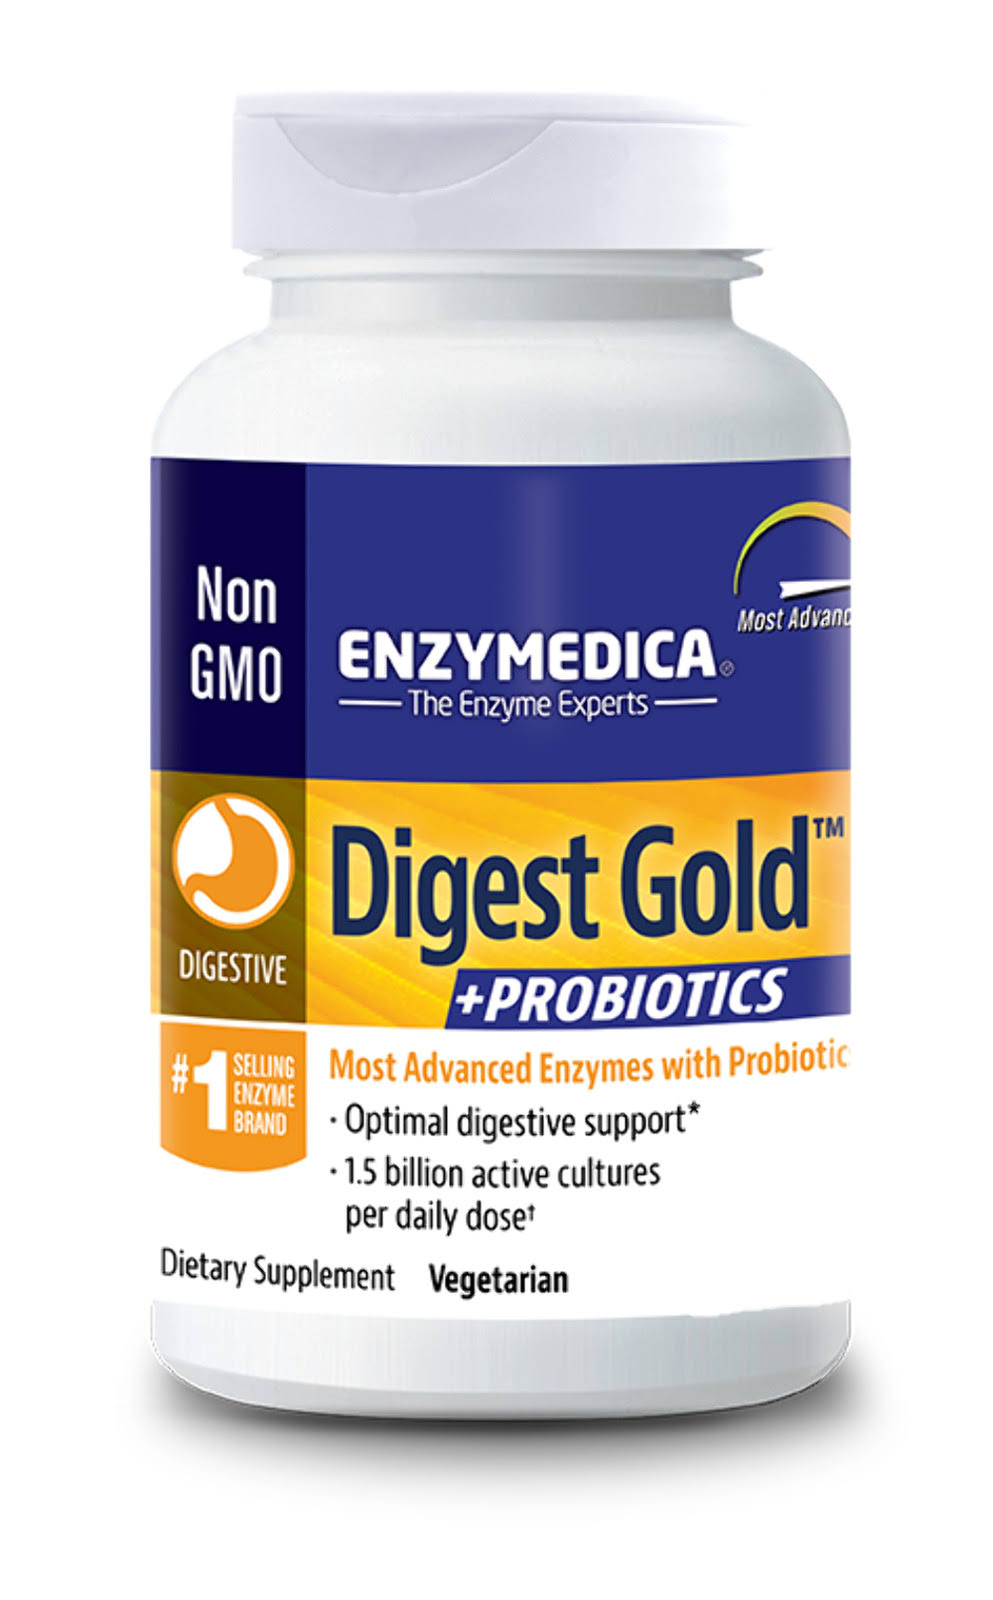 Enzymedica Digest Gold + Probiotics Advanced Digestive Enzymes with Probiotics